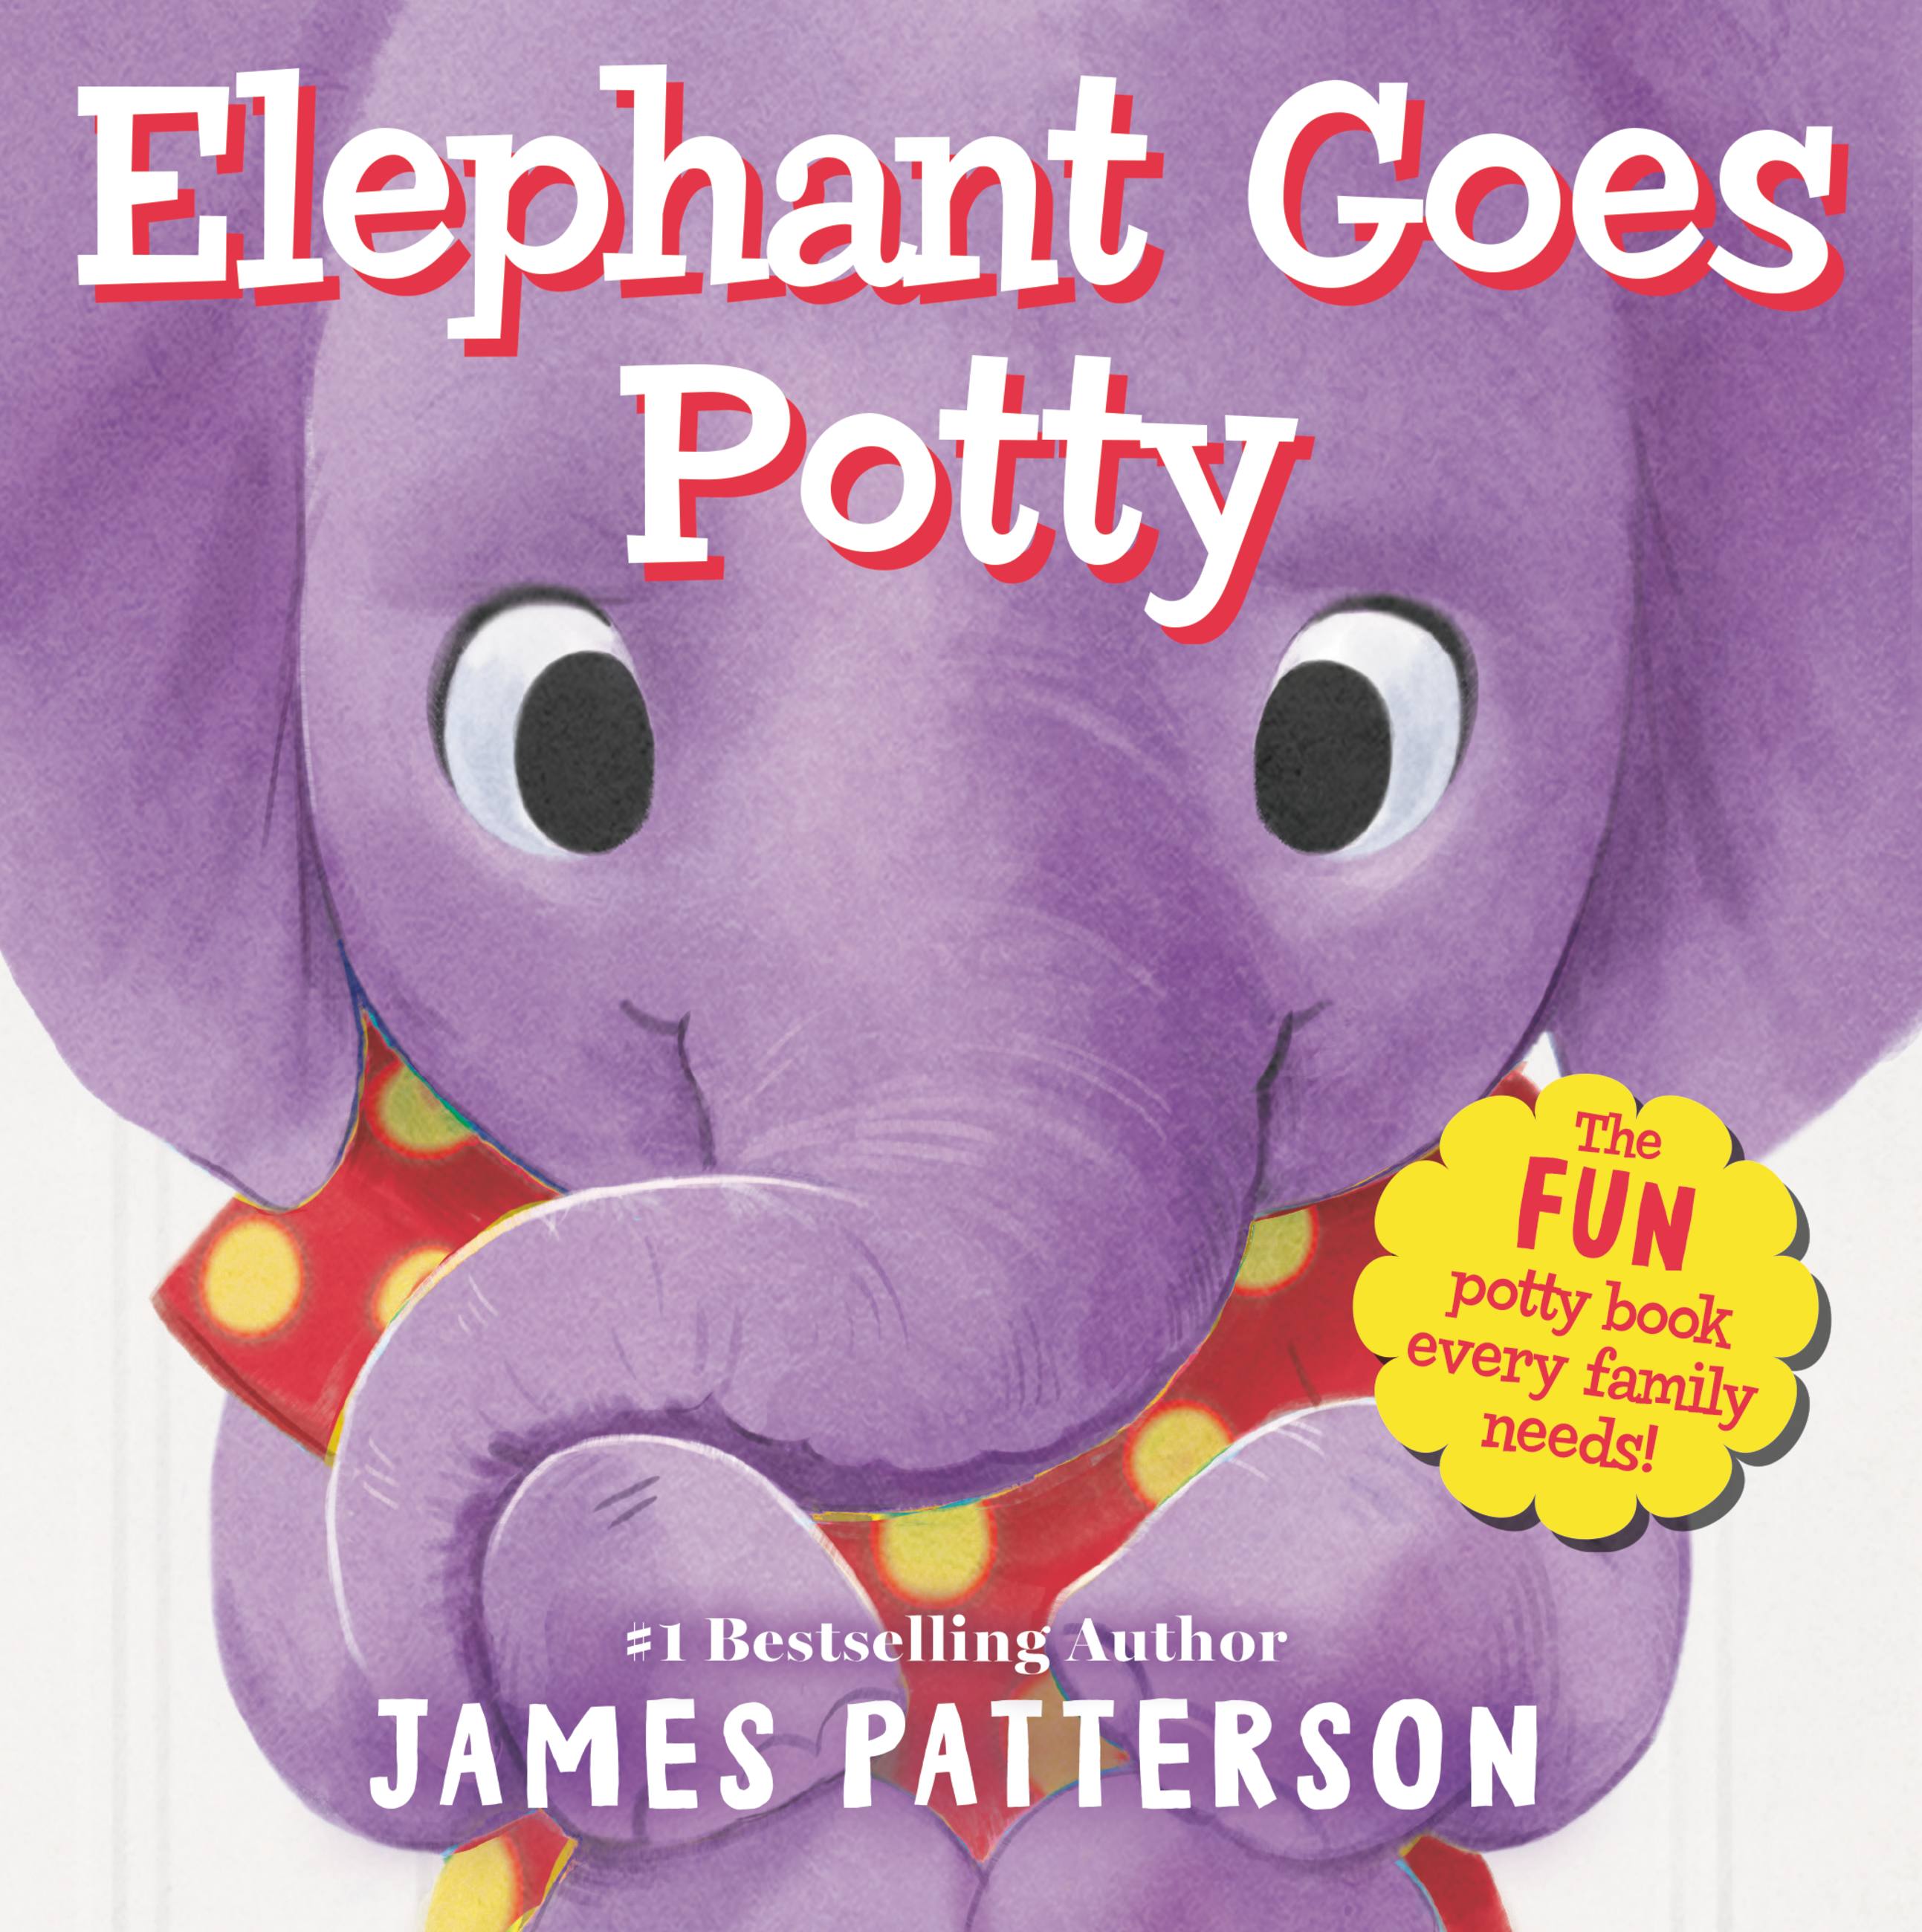 Elephant Goes Potty by James Patterson